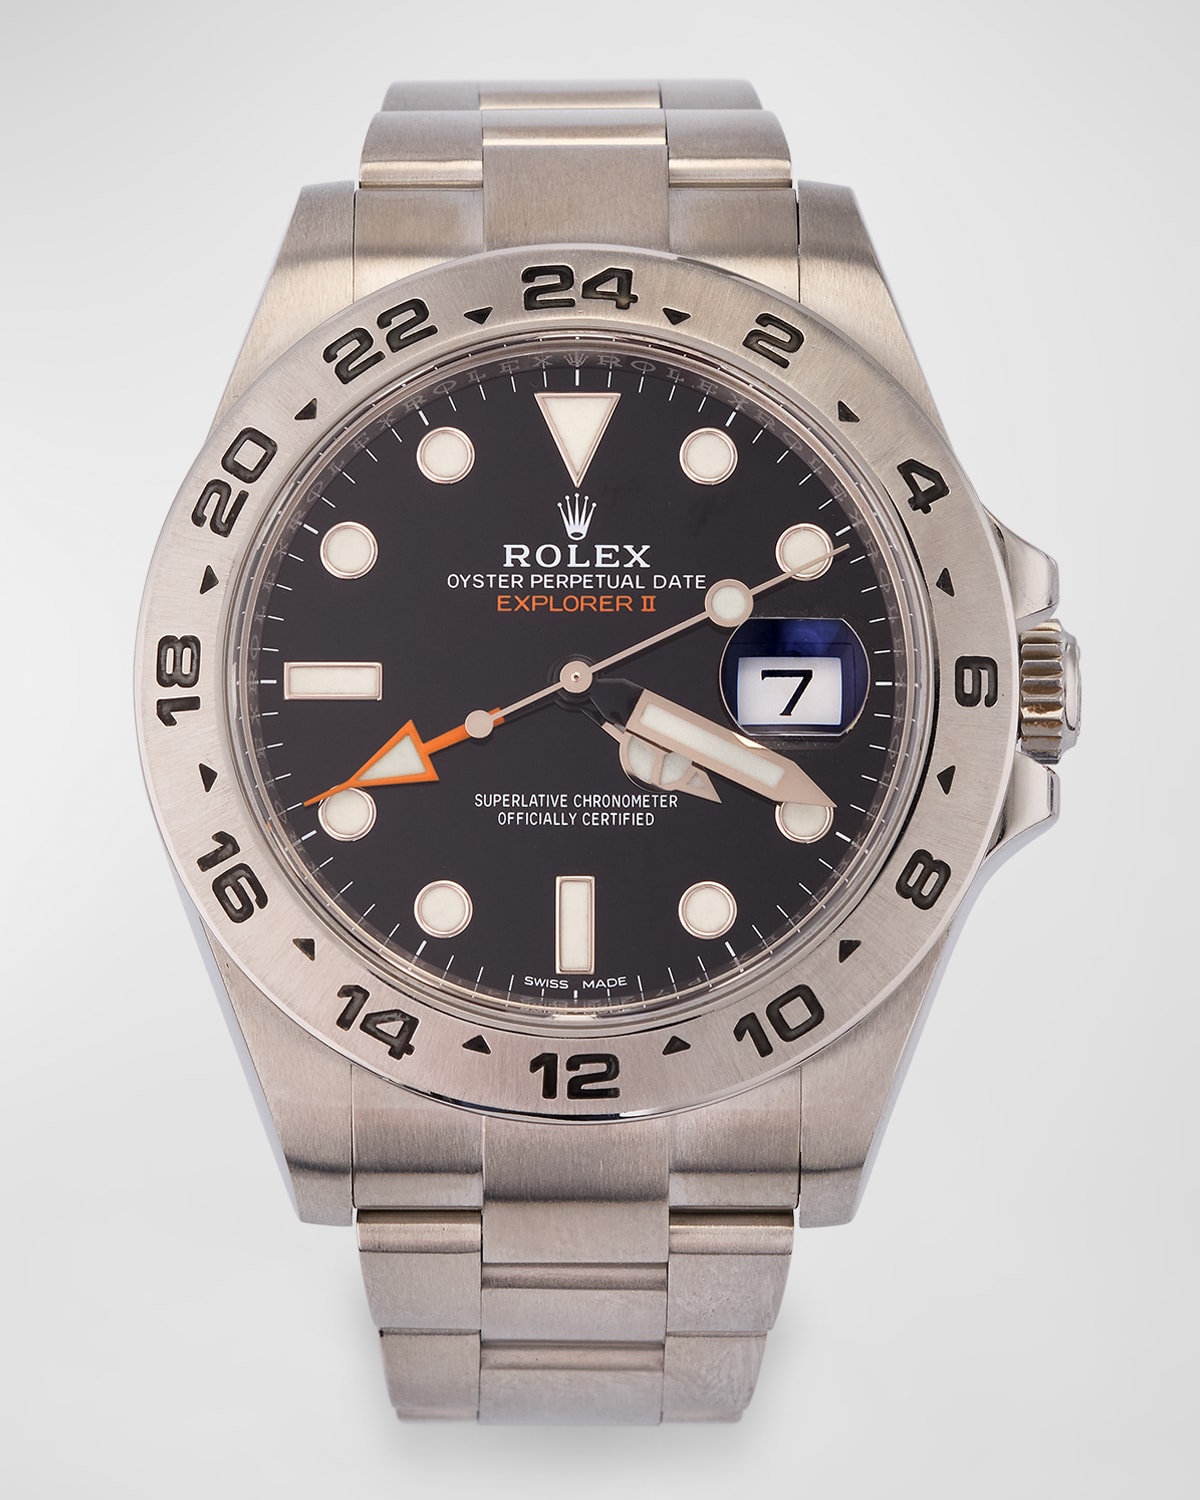 Rolex Oyster Perpetual Explorer II 42mm Watch